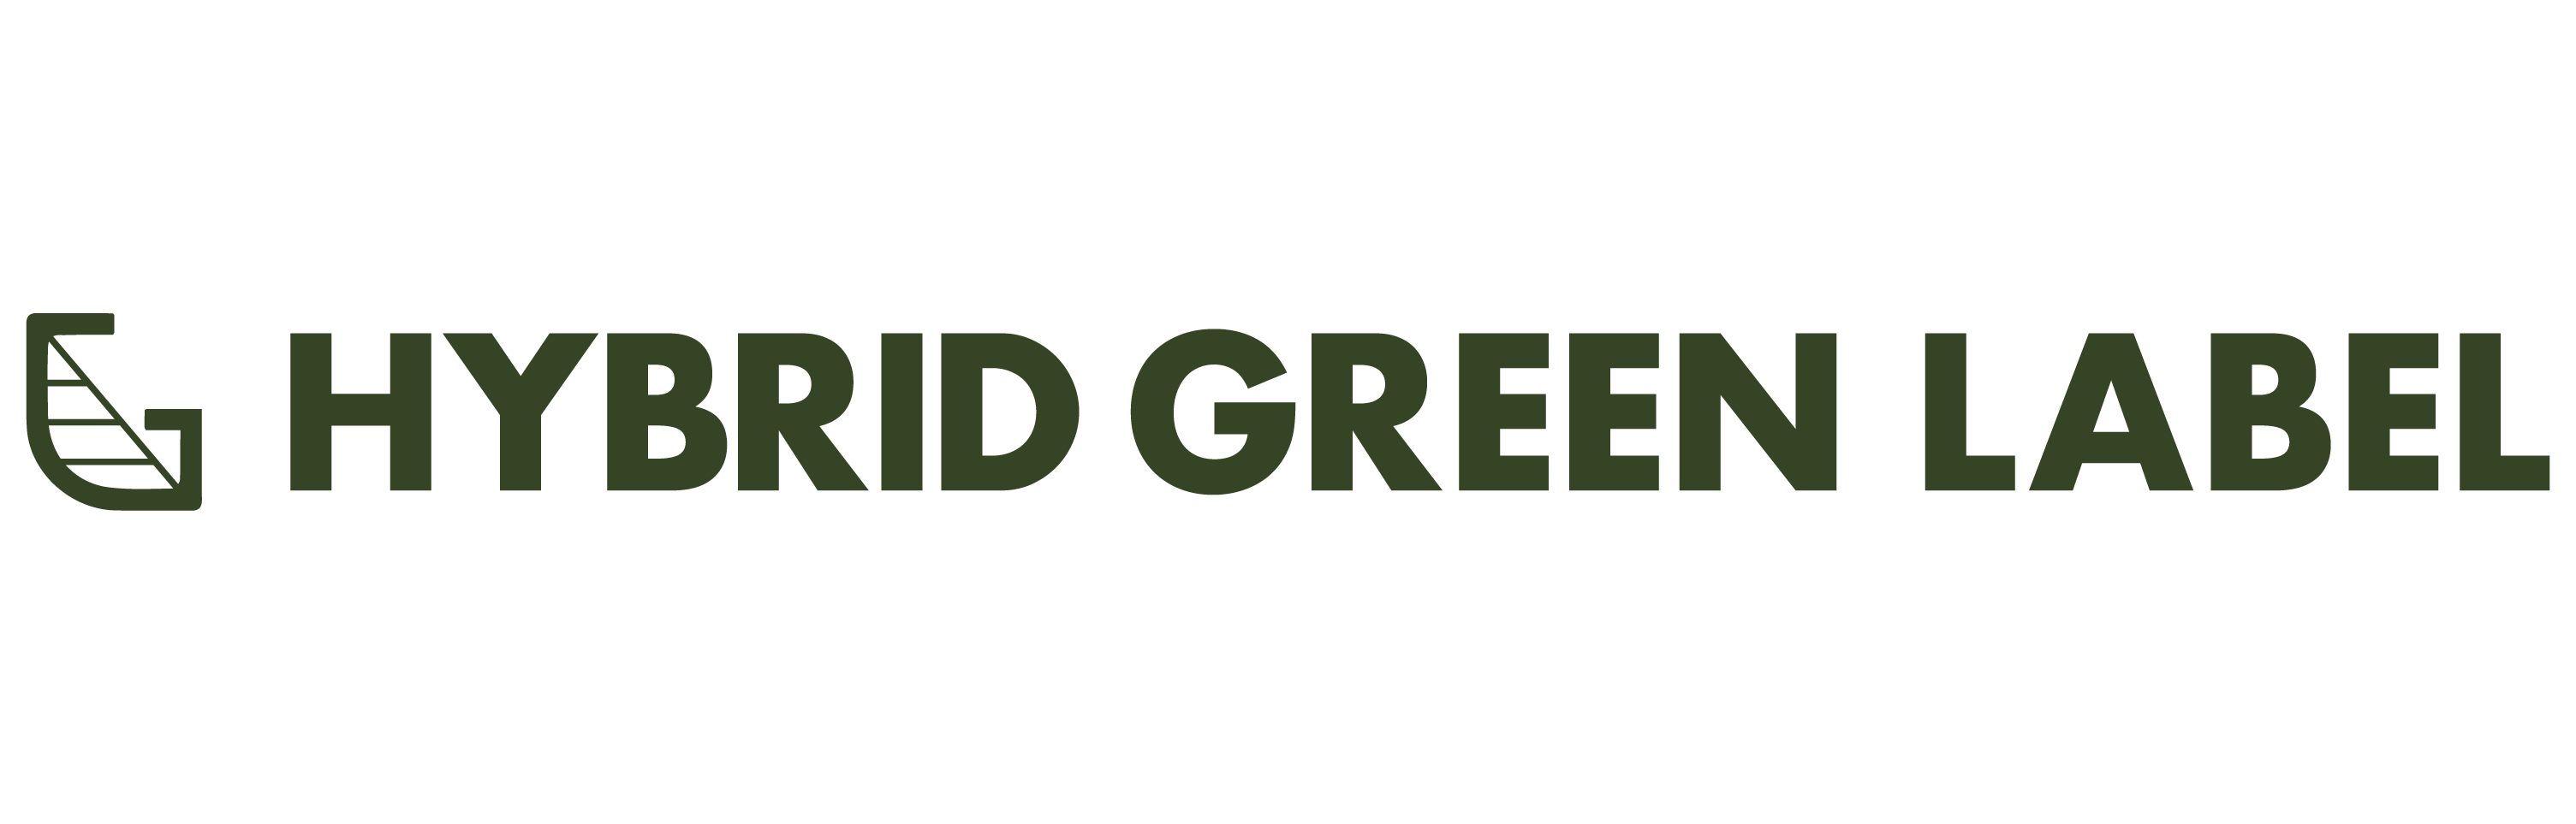 Hybrid Green Label_logo